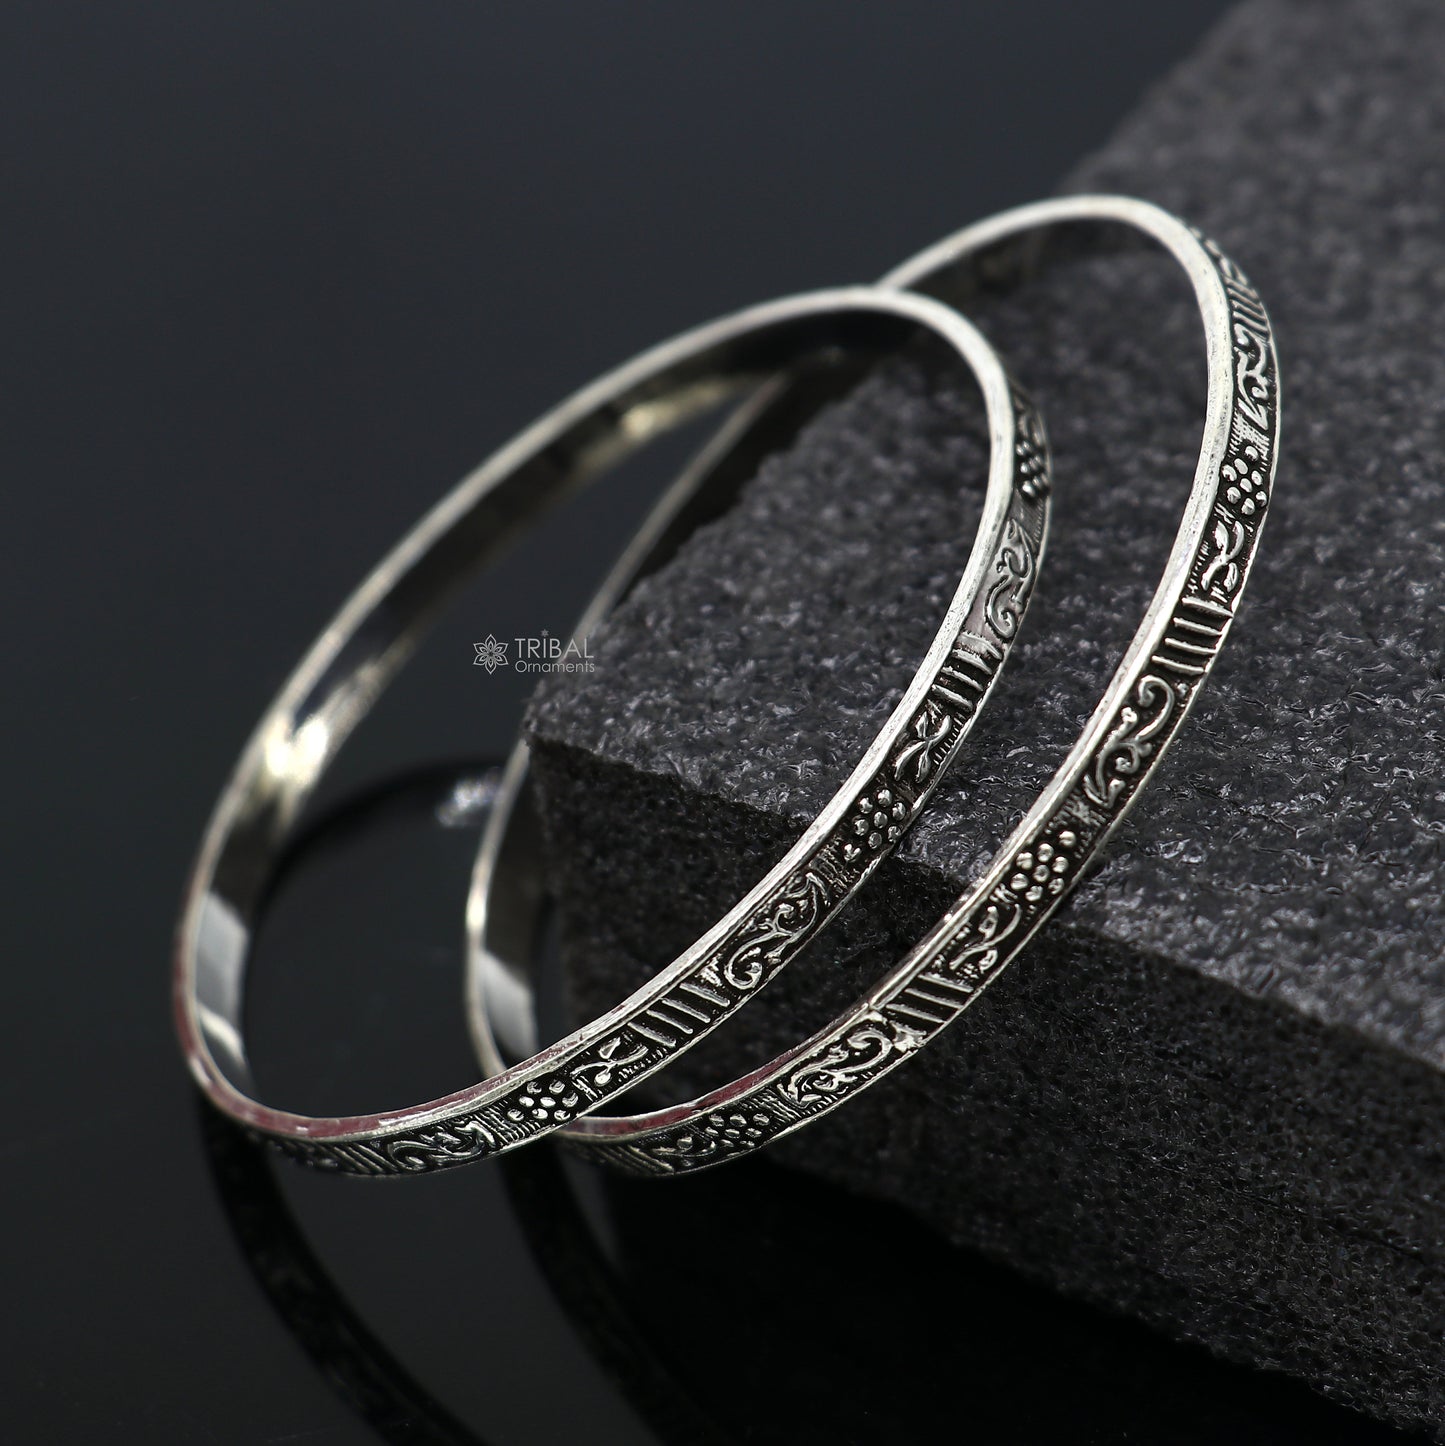 925 sterling silver unique style handmade stylish trendy bangle bracelet , best brides collection wedding NAVRATRI jewelry nba403 - TRIBAL ORNAMENTS